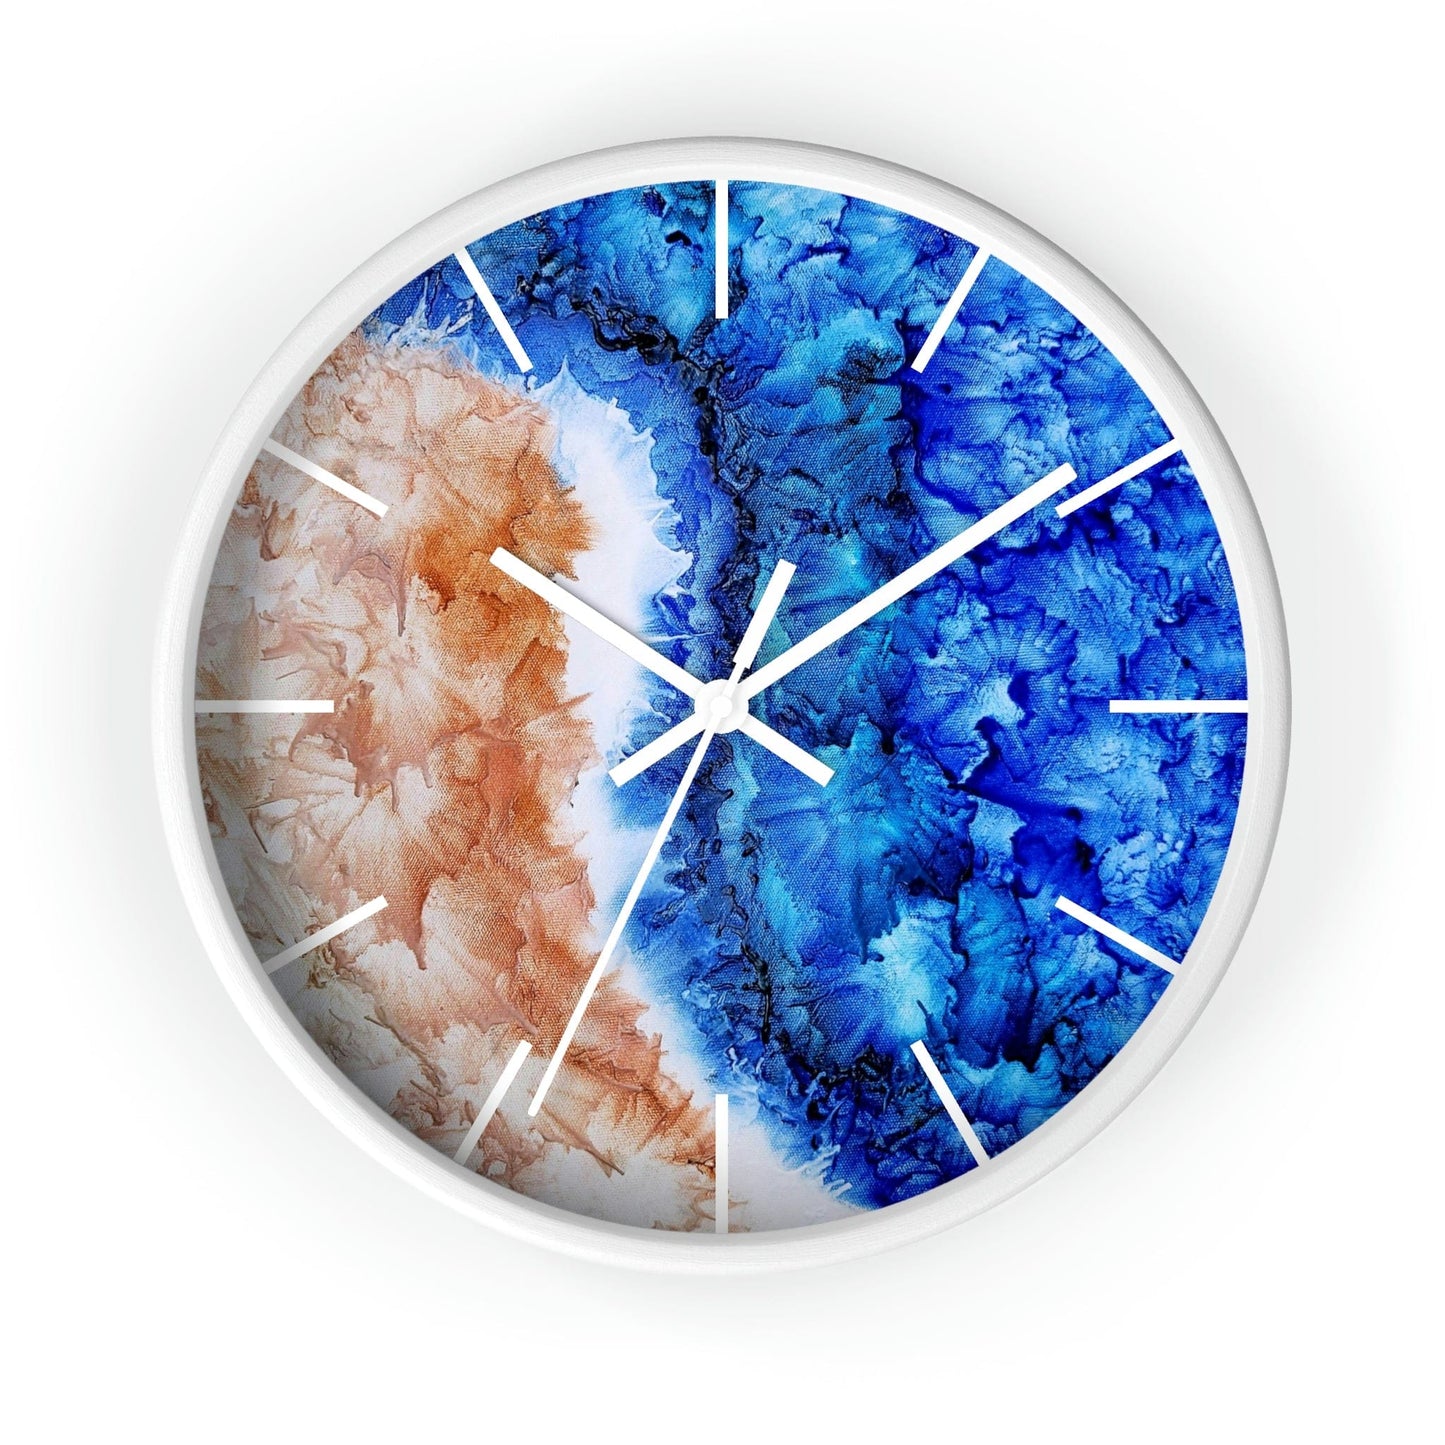 Ocean Wall Clock - Ocean Dreams